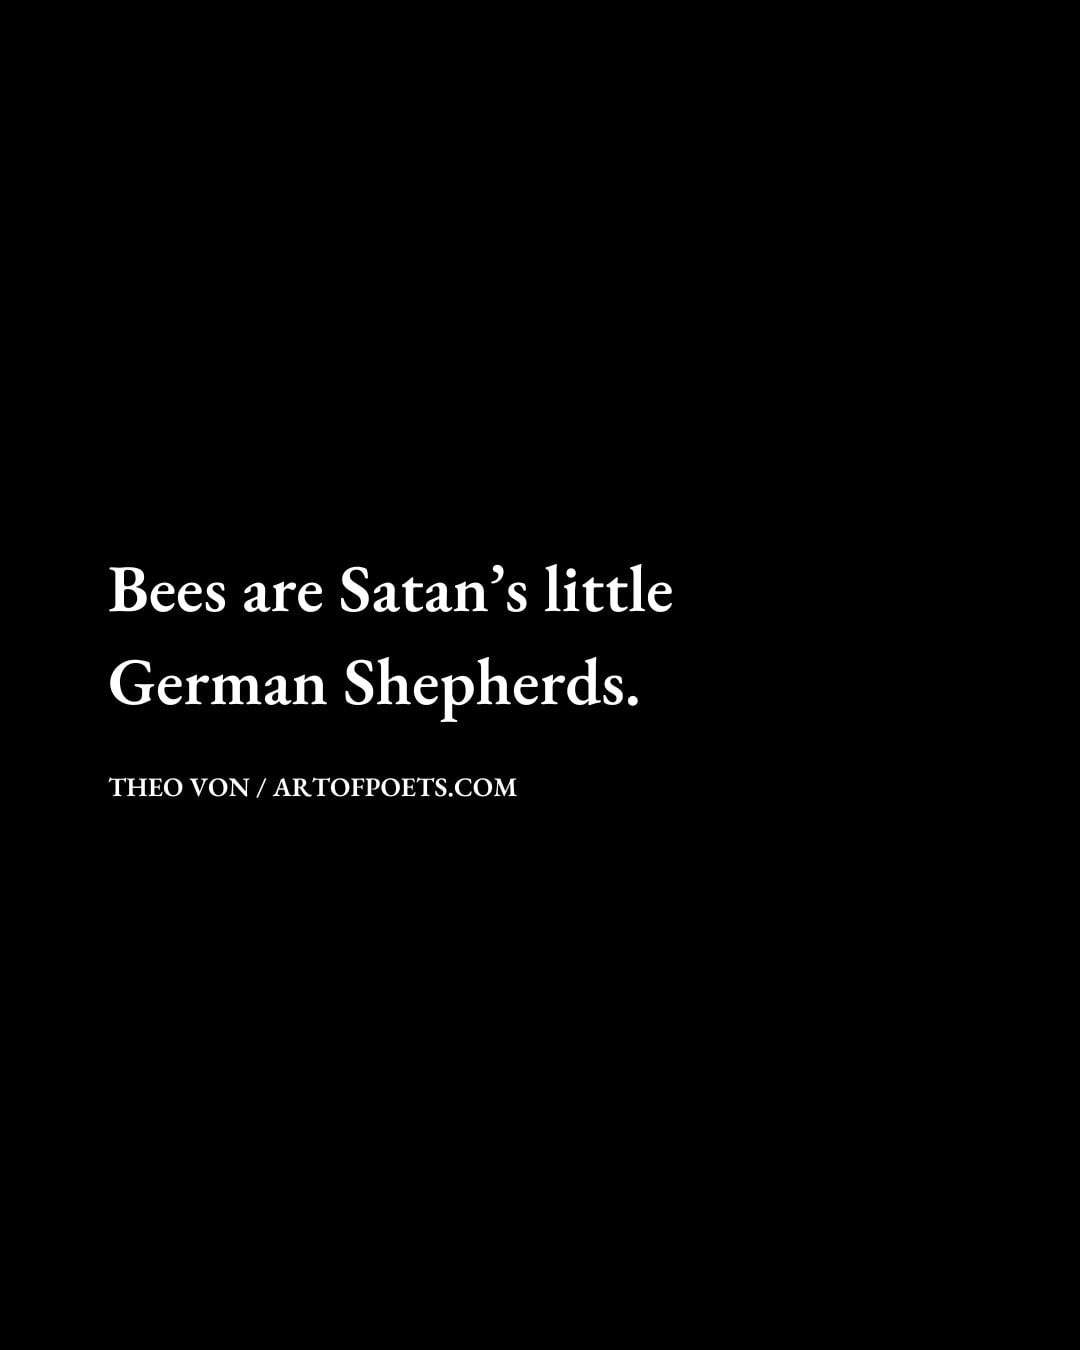 Bees are Satans little German Shepherds